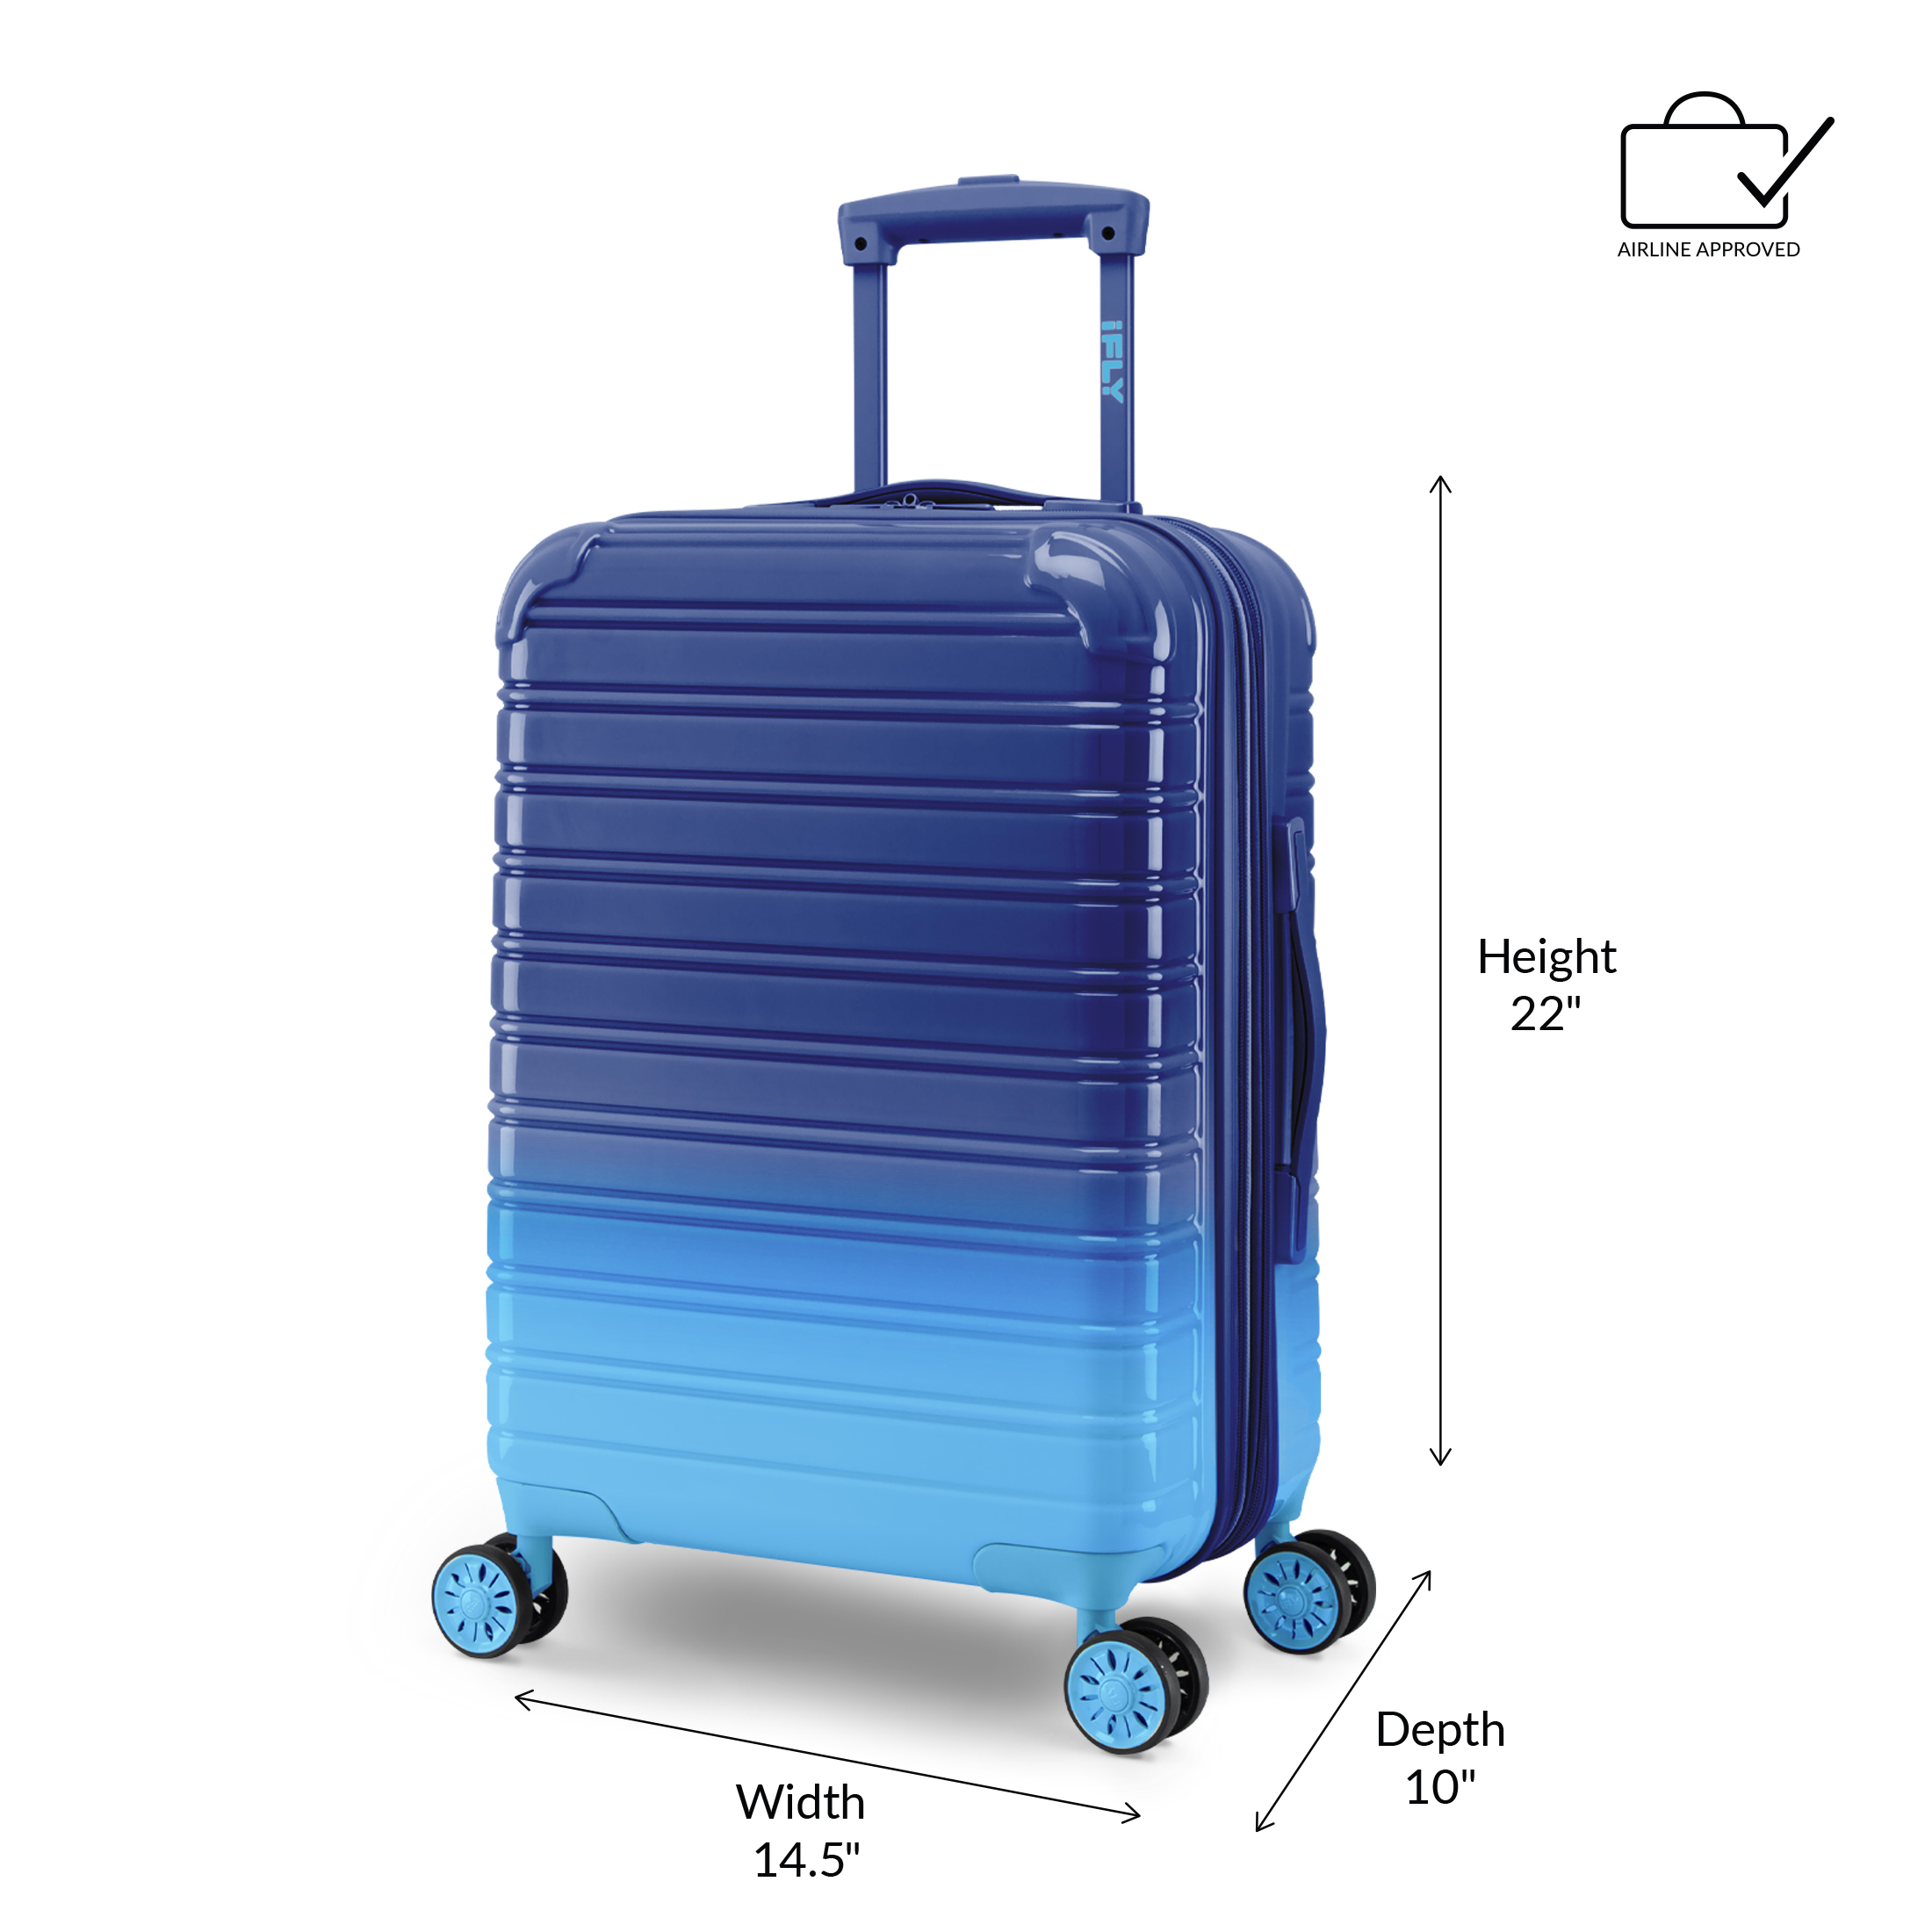 iFLY Hardside Fibertech Carry On Luggage 20", Sunny Sky - image 3 of 8